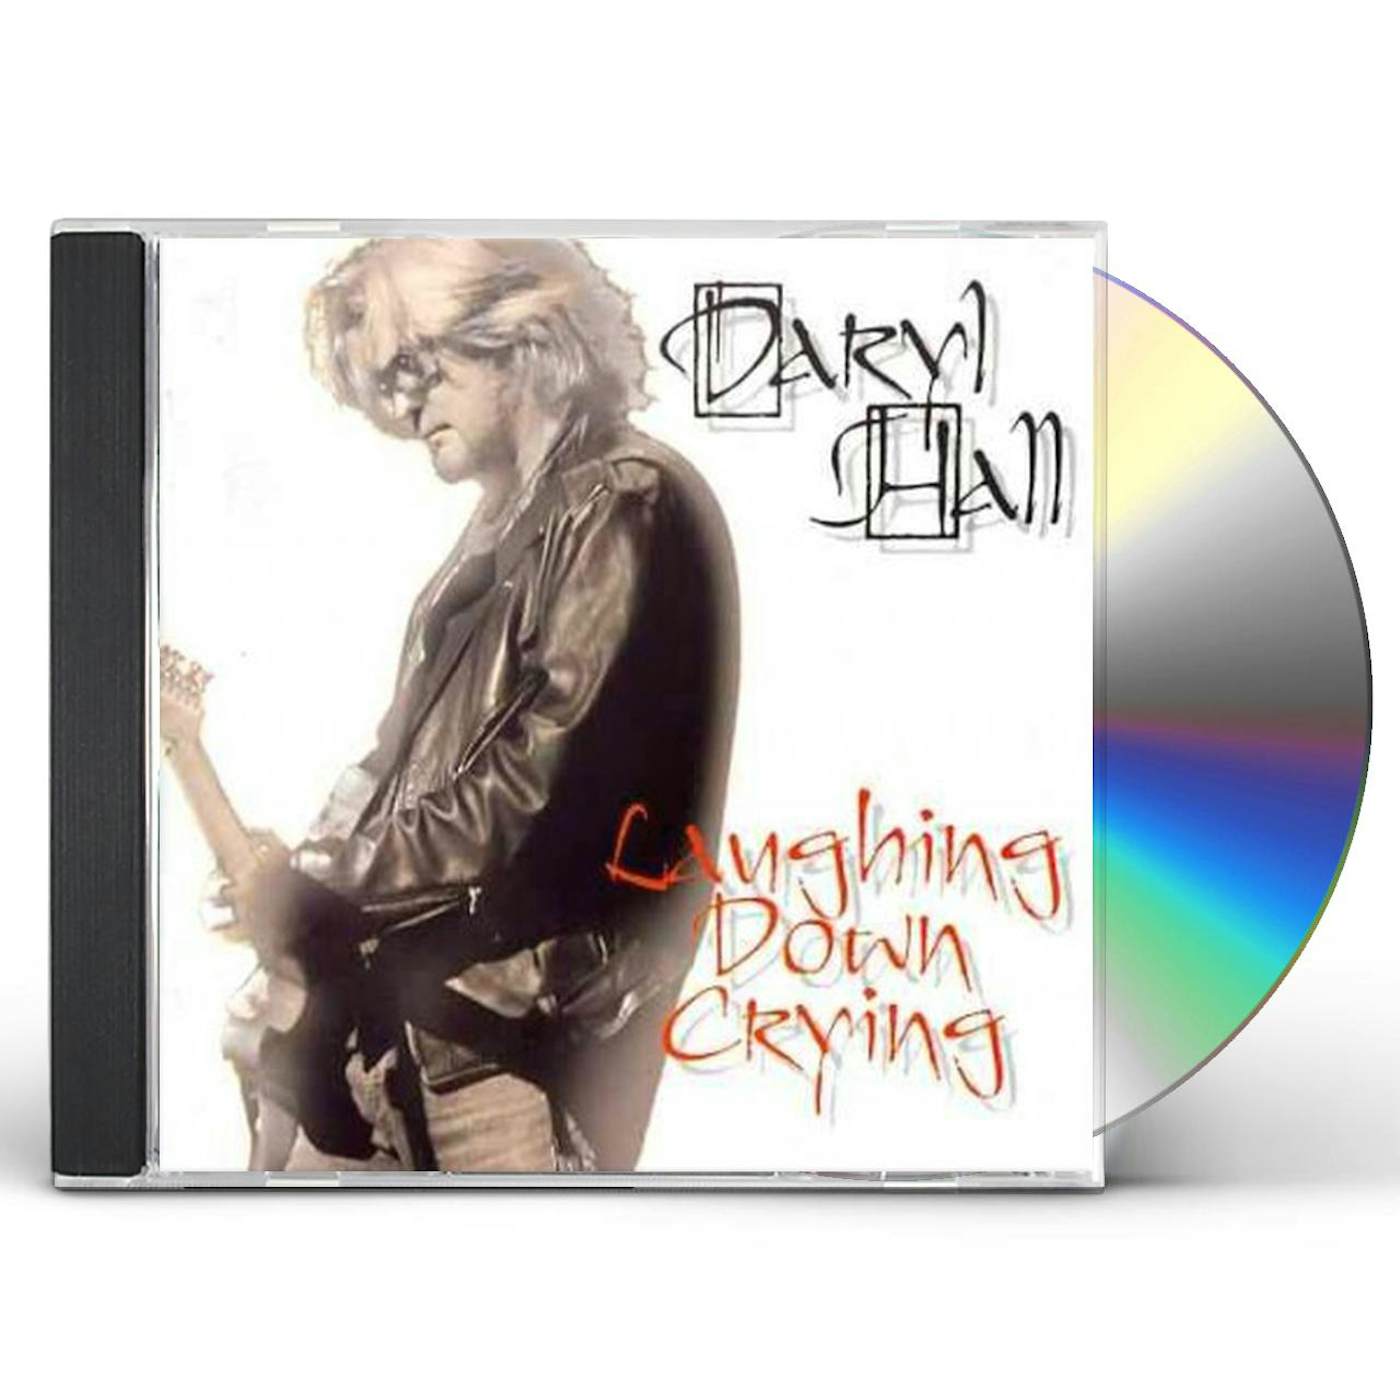 Daryl Hall LAUGHING DOWN CRYING CD